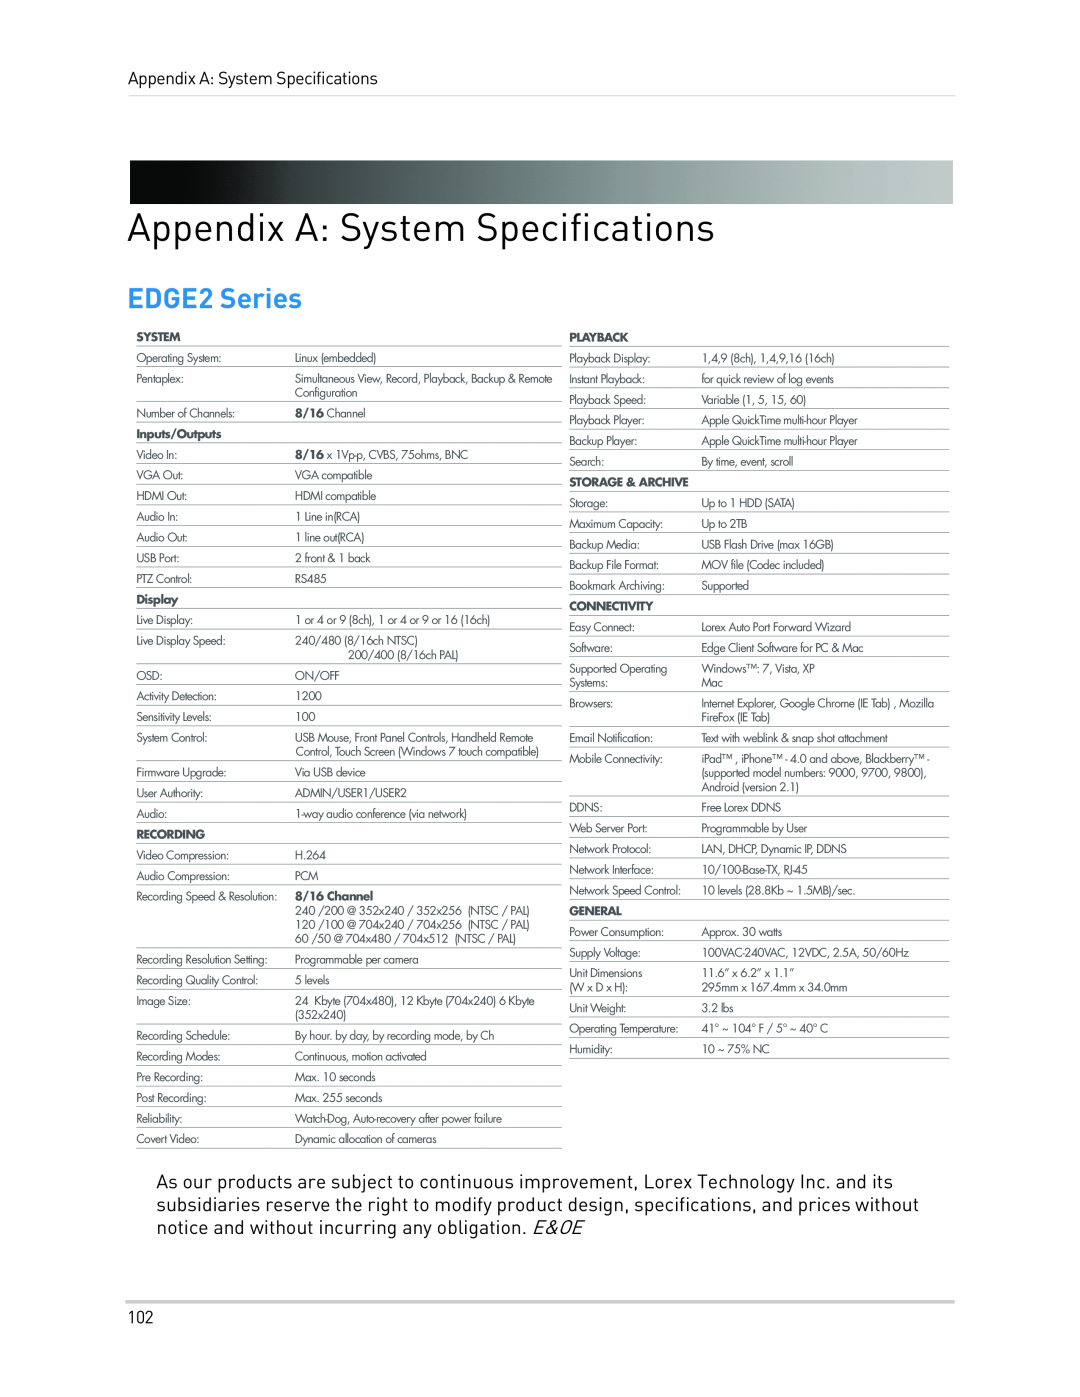 LOREX Technology LH340 EDGE3 Appendix A: System Specifications, EDGE2 Series, Appendix A System Specifications, Display 